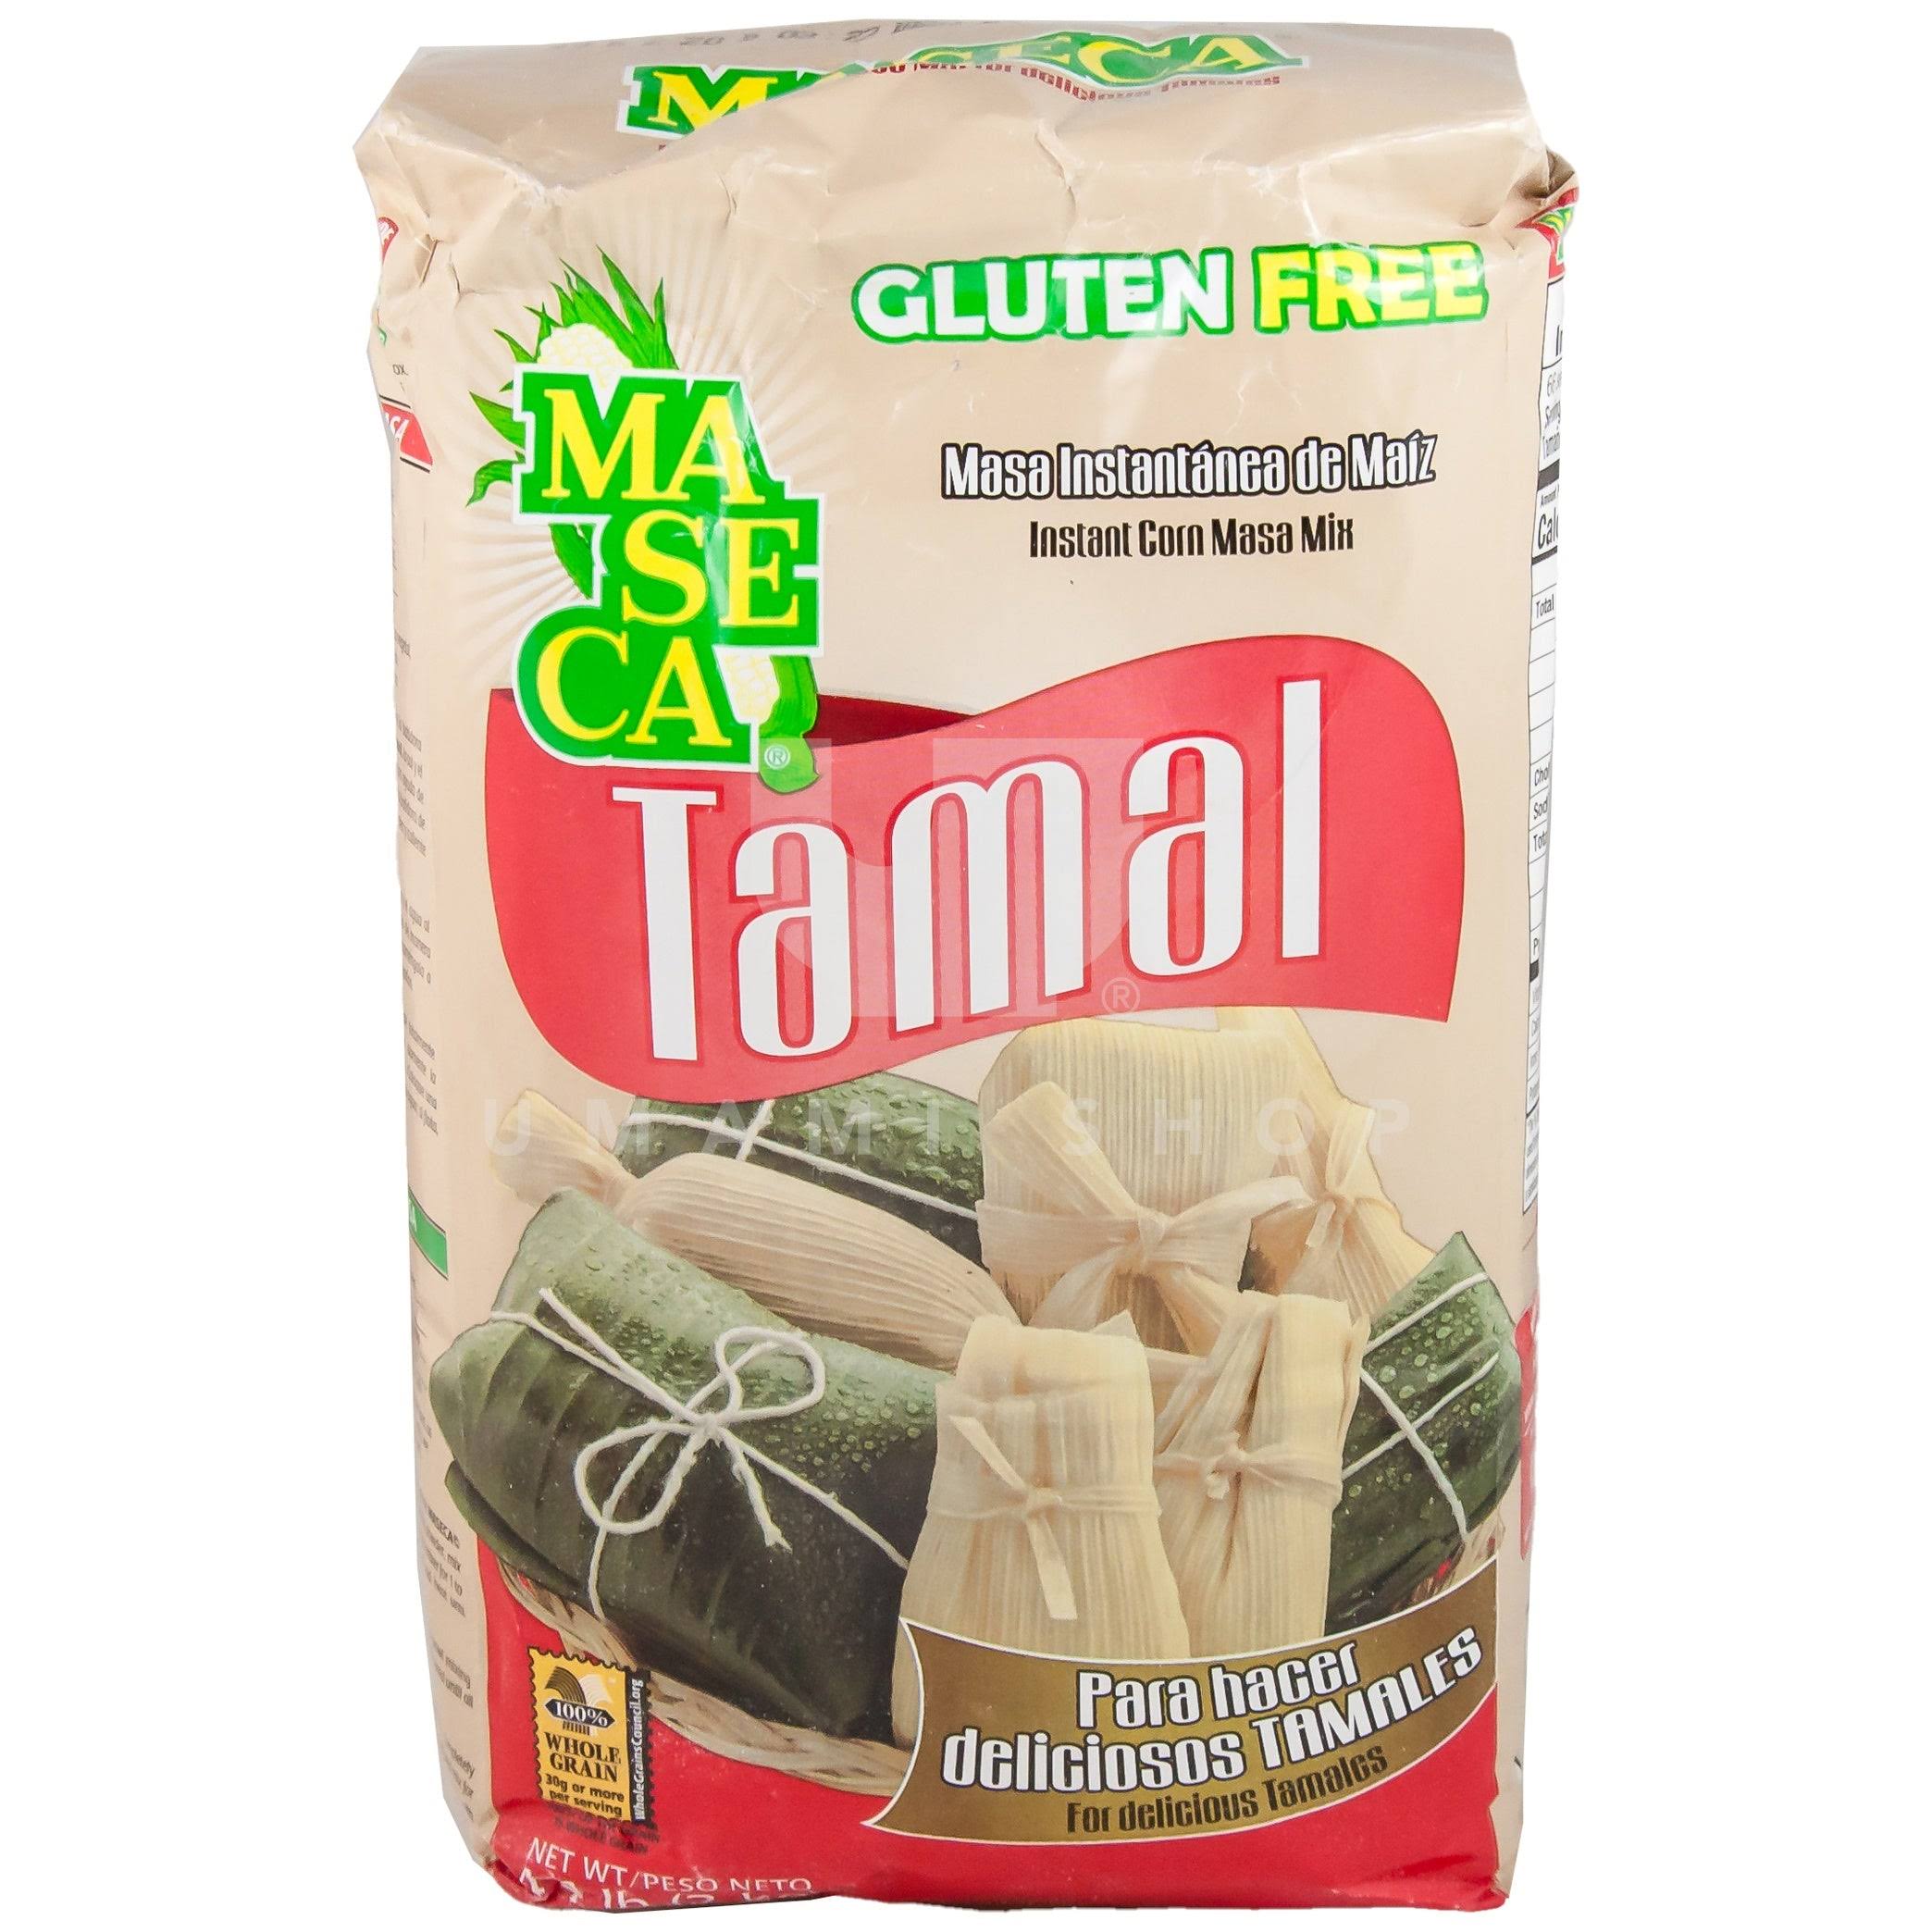 Maseca Tamal Gluten-Free Instant Corn Masa Mix - 4.4lb